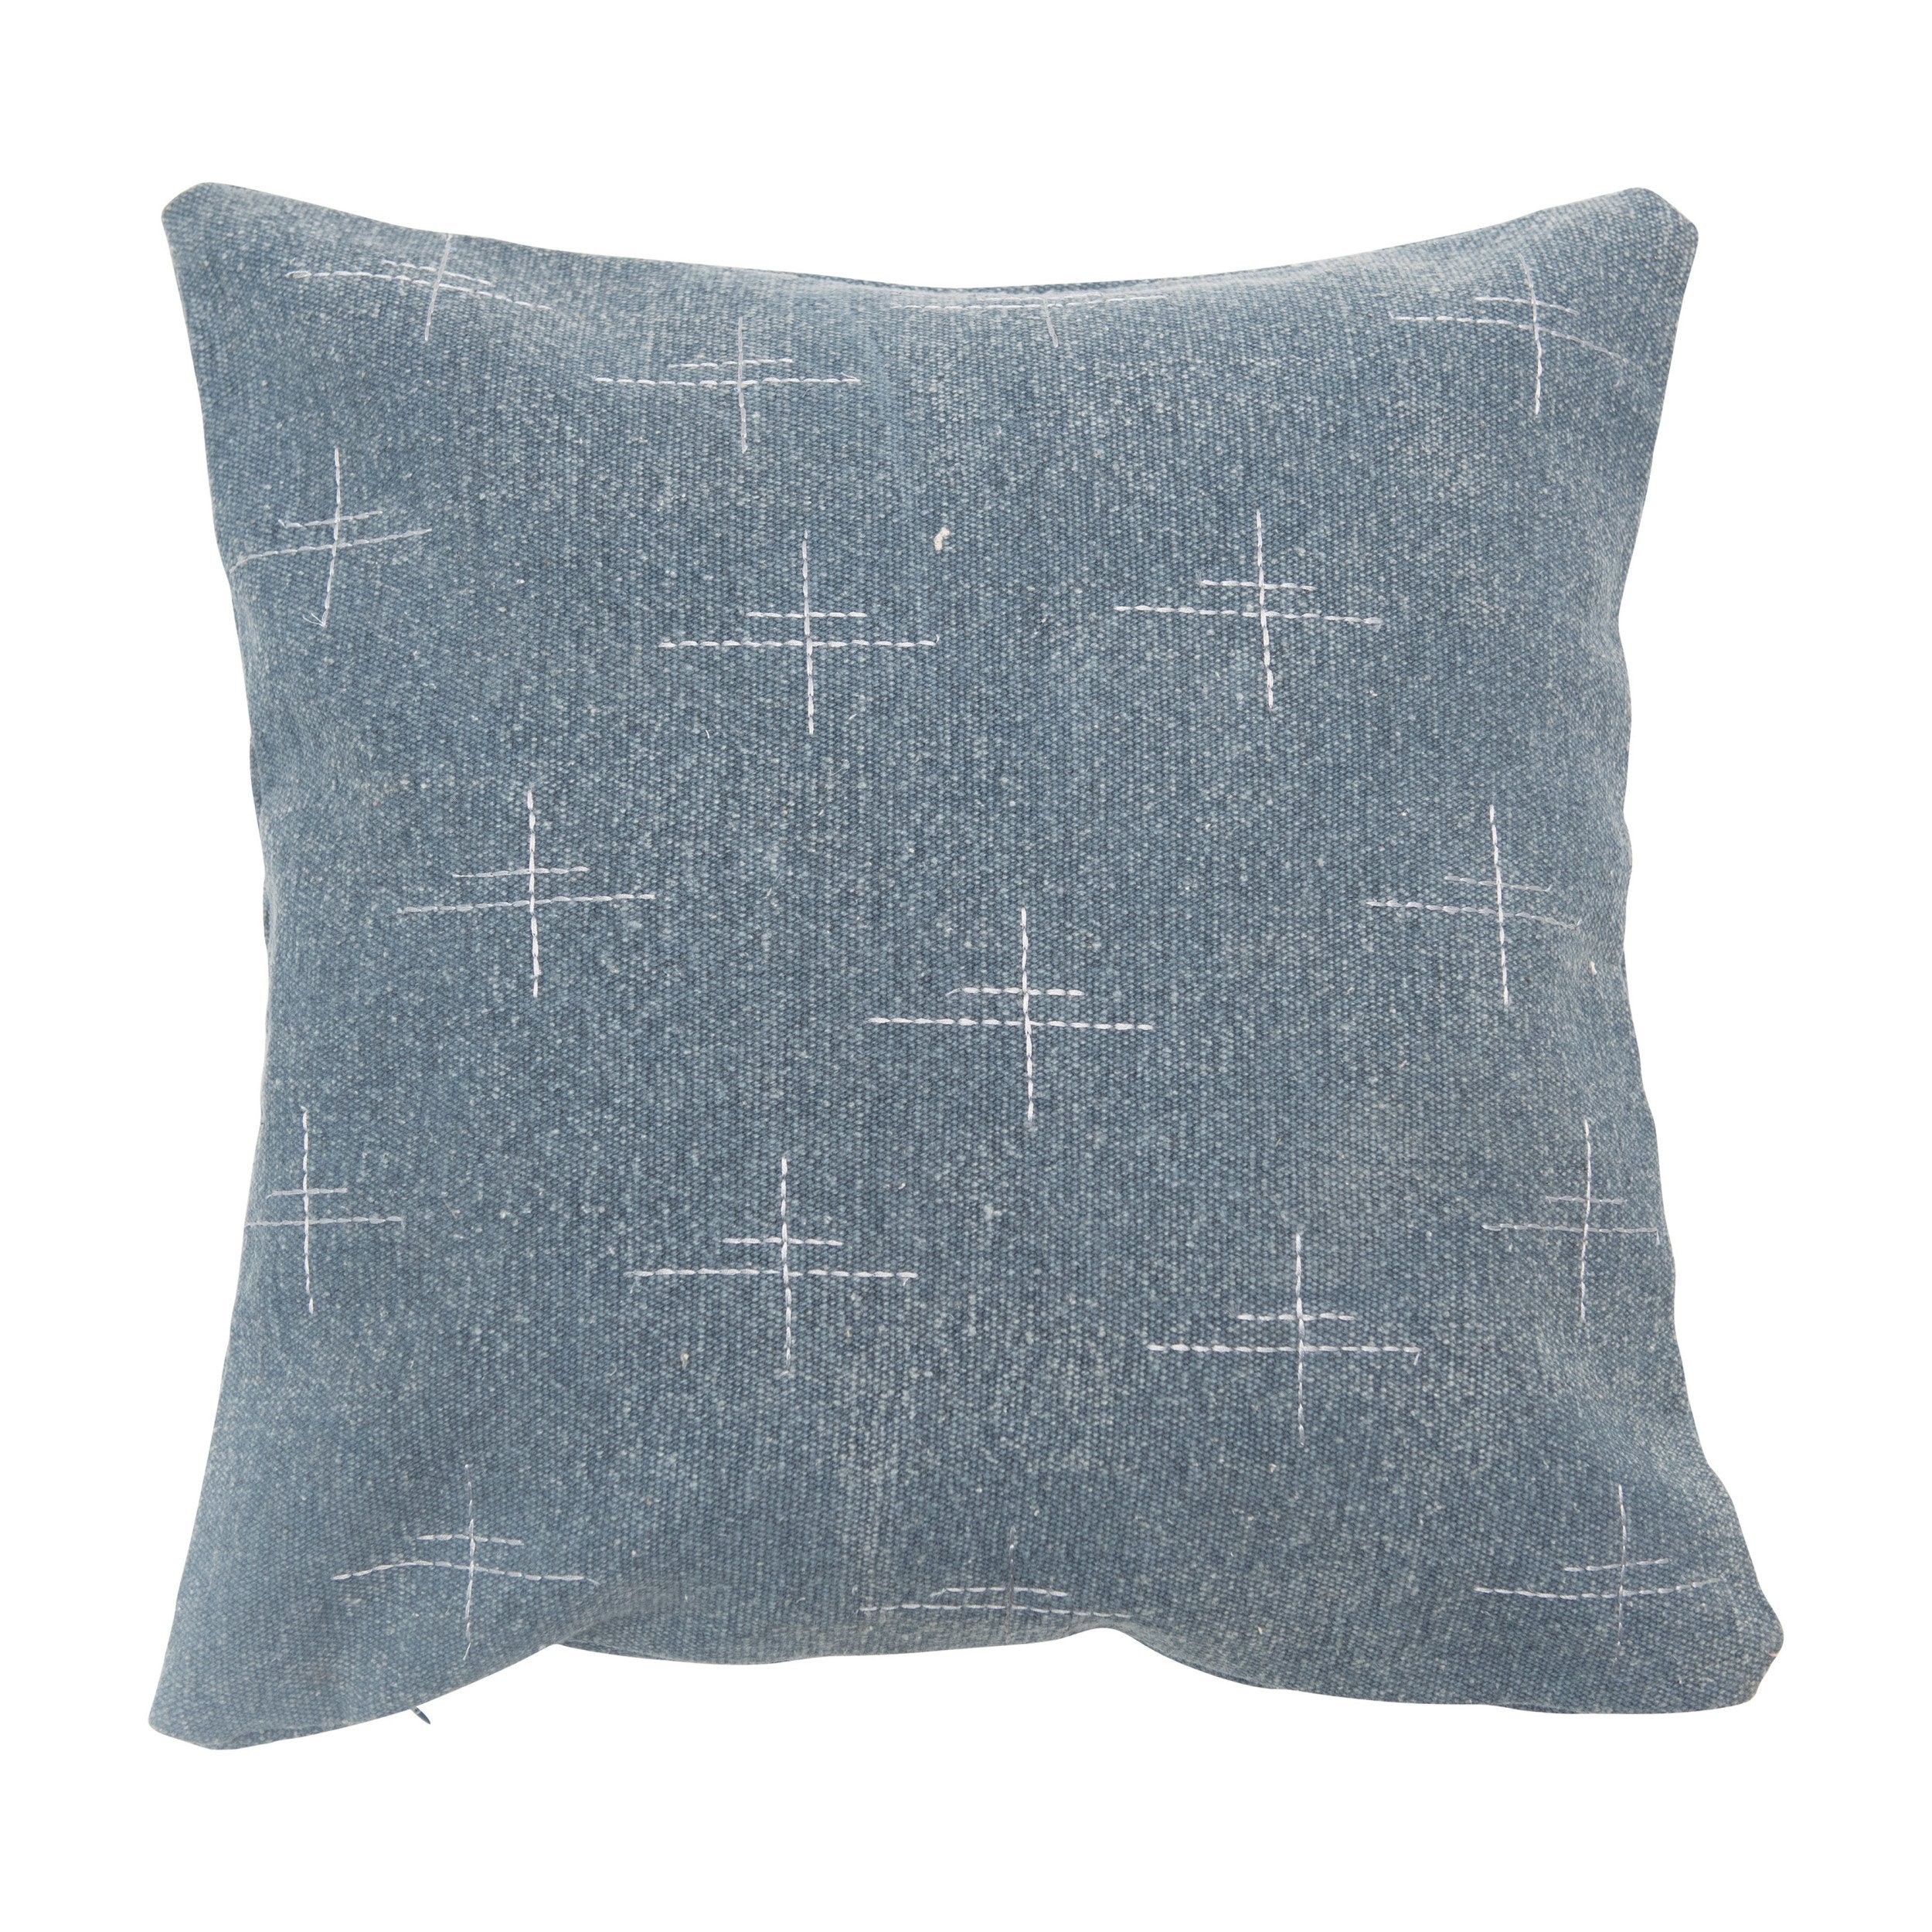 Embroidered Stonewash Woven Pillow